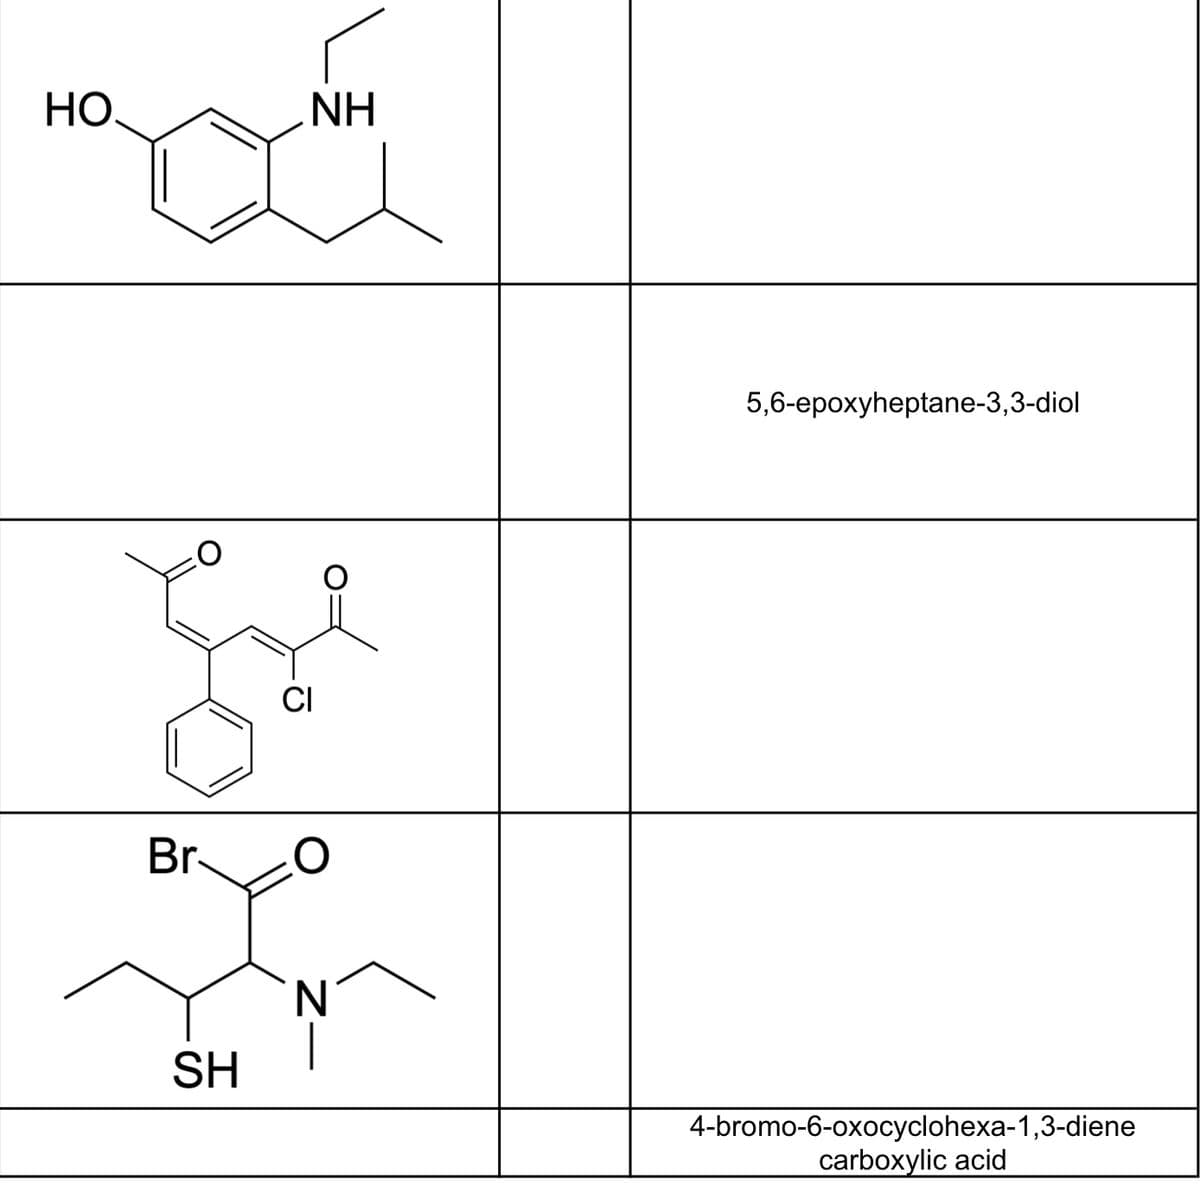 НО.
Br
SH
NH
CI
O
N
|
5,6-epoxyheptane-3,3-diol
4-bromo-6-oxocyclohexa-1,3-diene
carboxylic acid